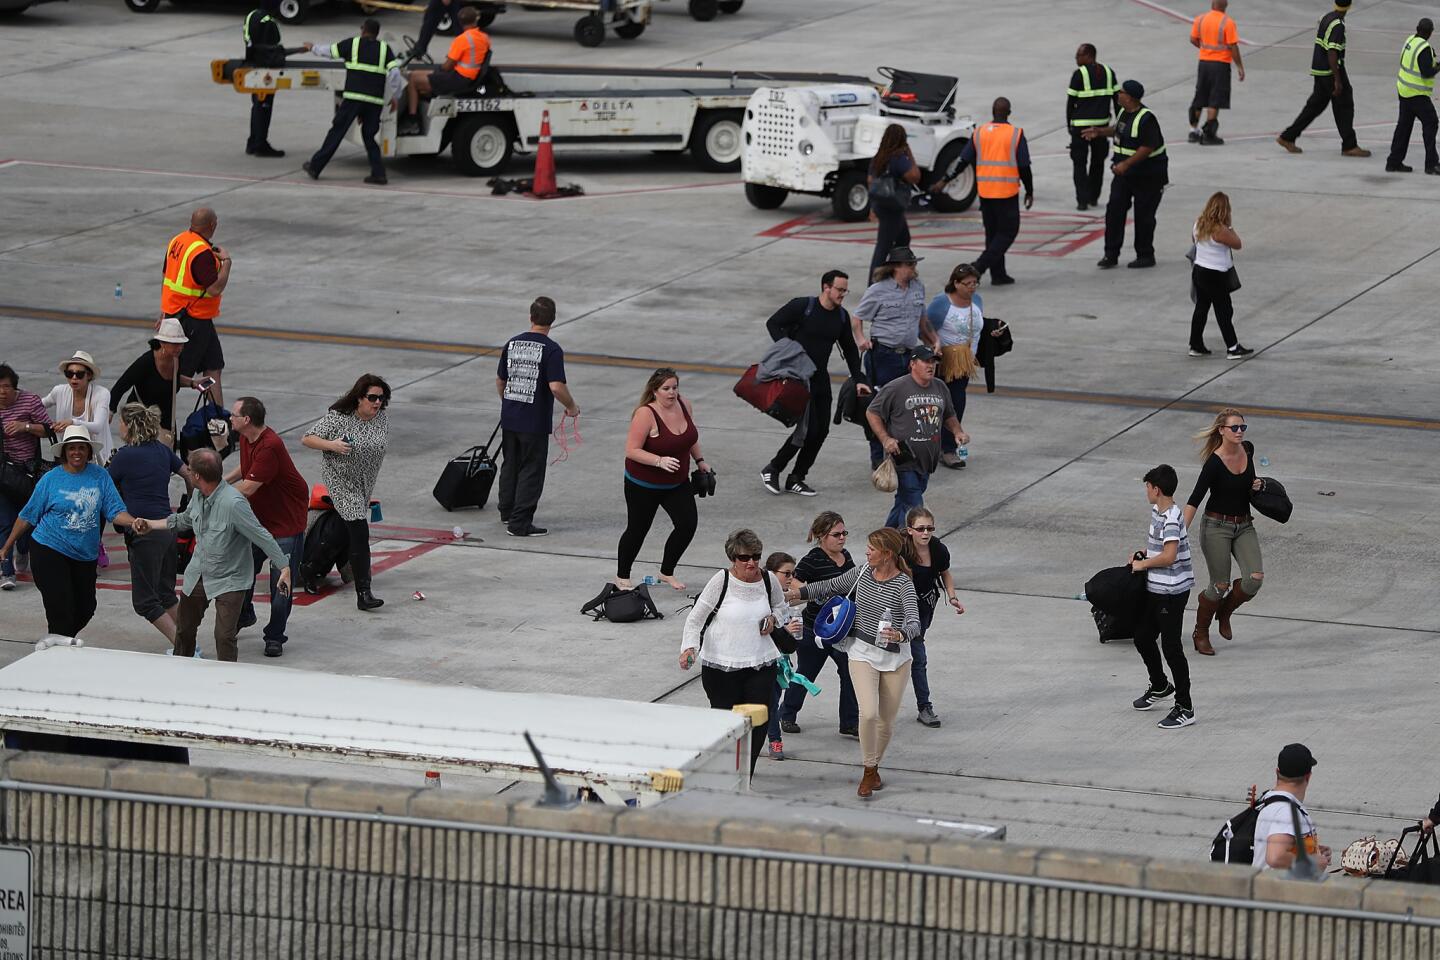 Florida airport shooting